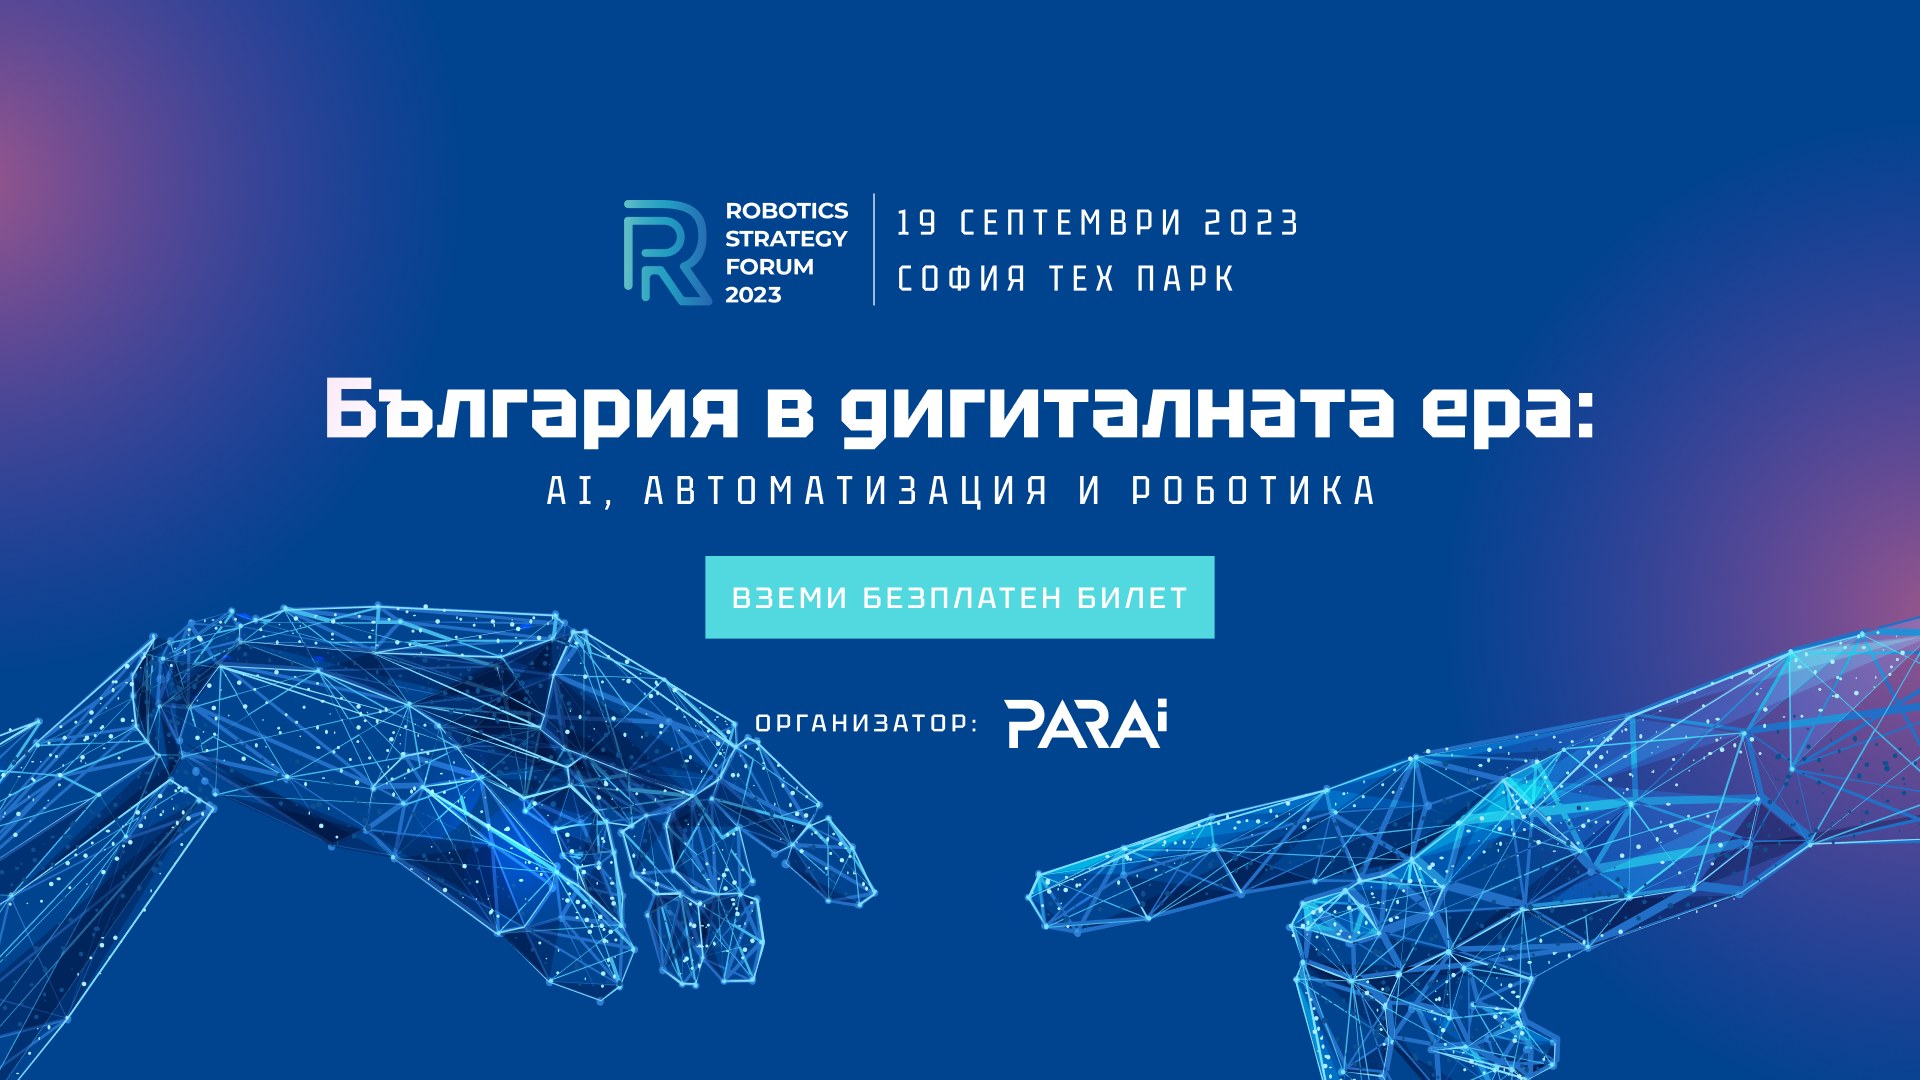 Robotics Strategy Forum 2023